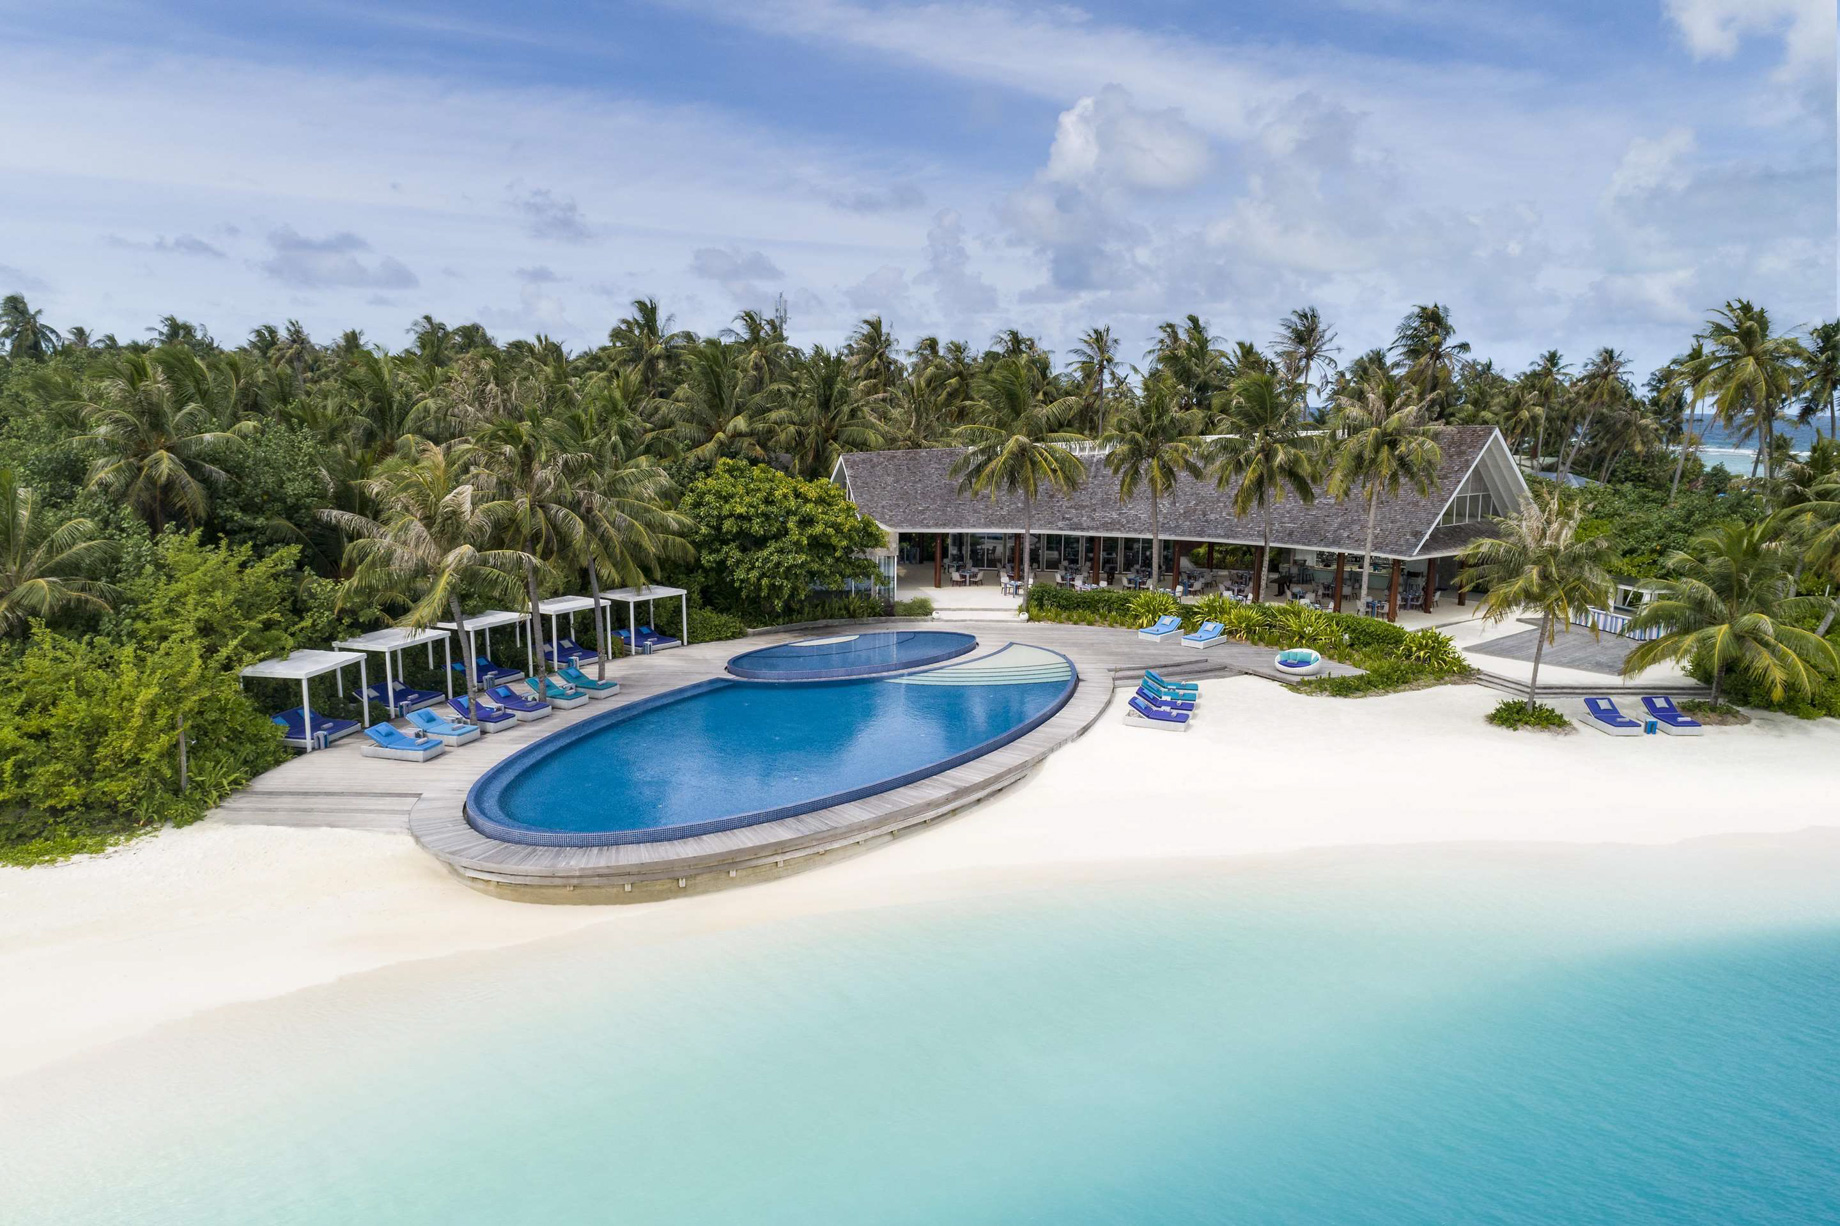 Niyama Private Islands Maldives Resort - Dhaalu Atoll, Maldives - Blu Restaurant Aerial View